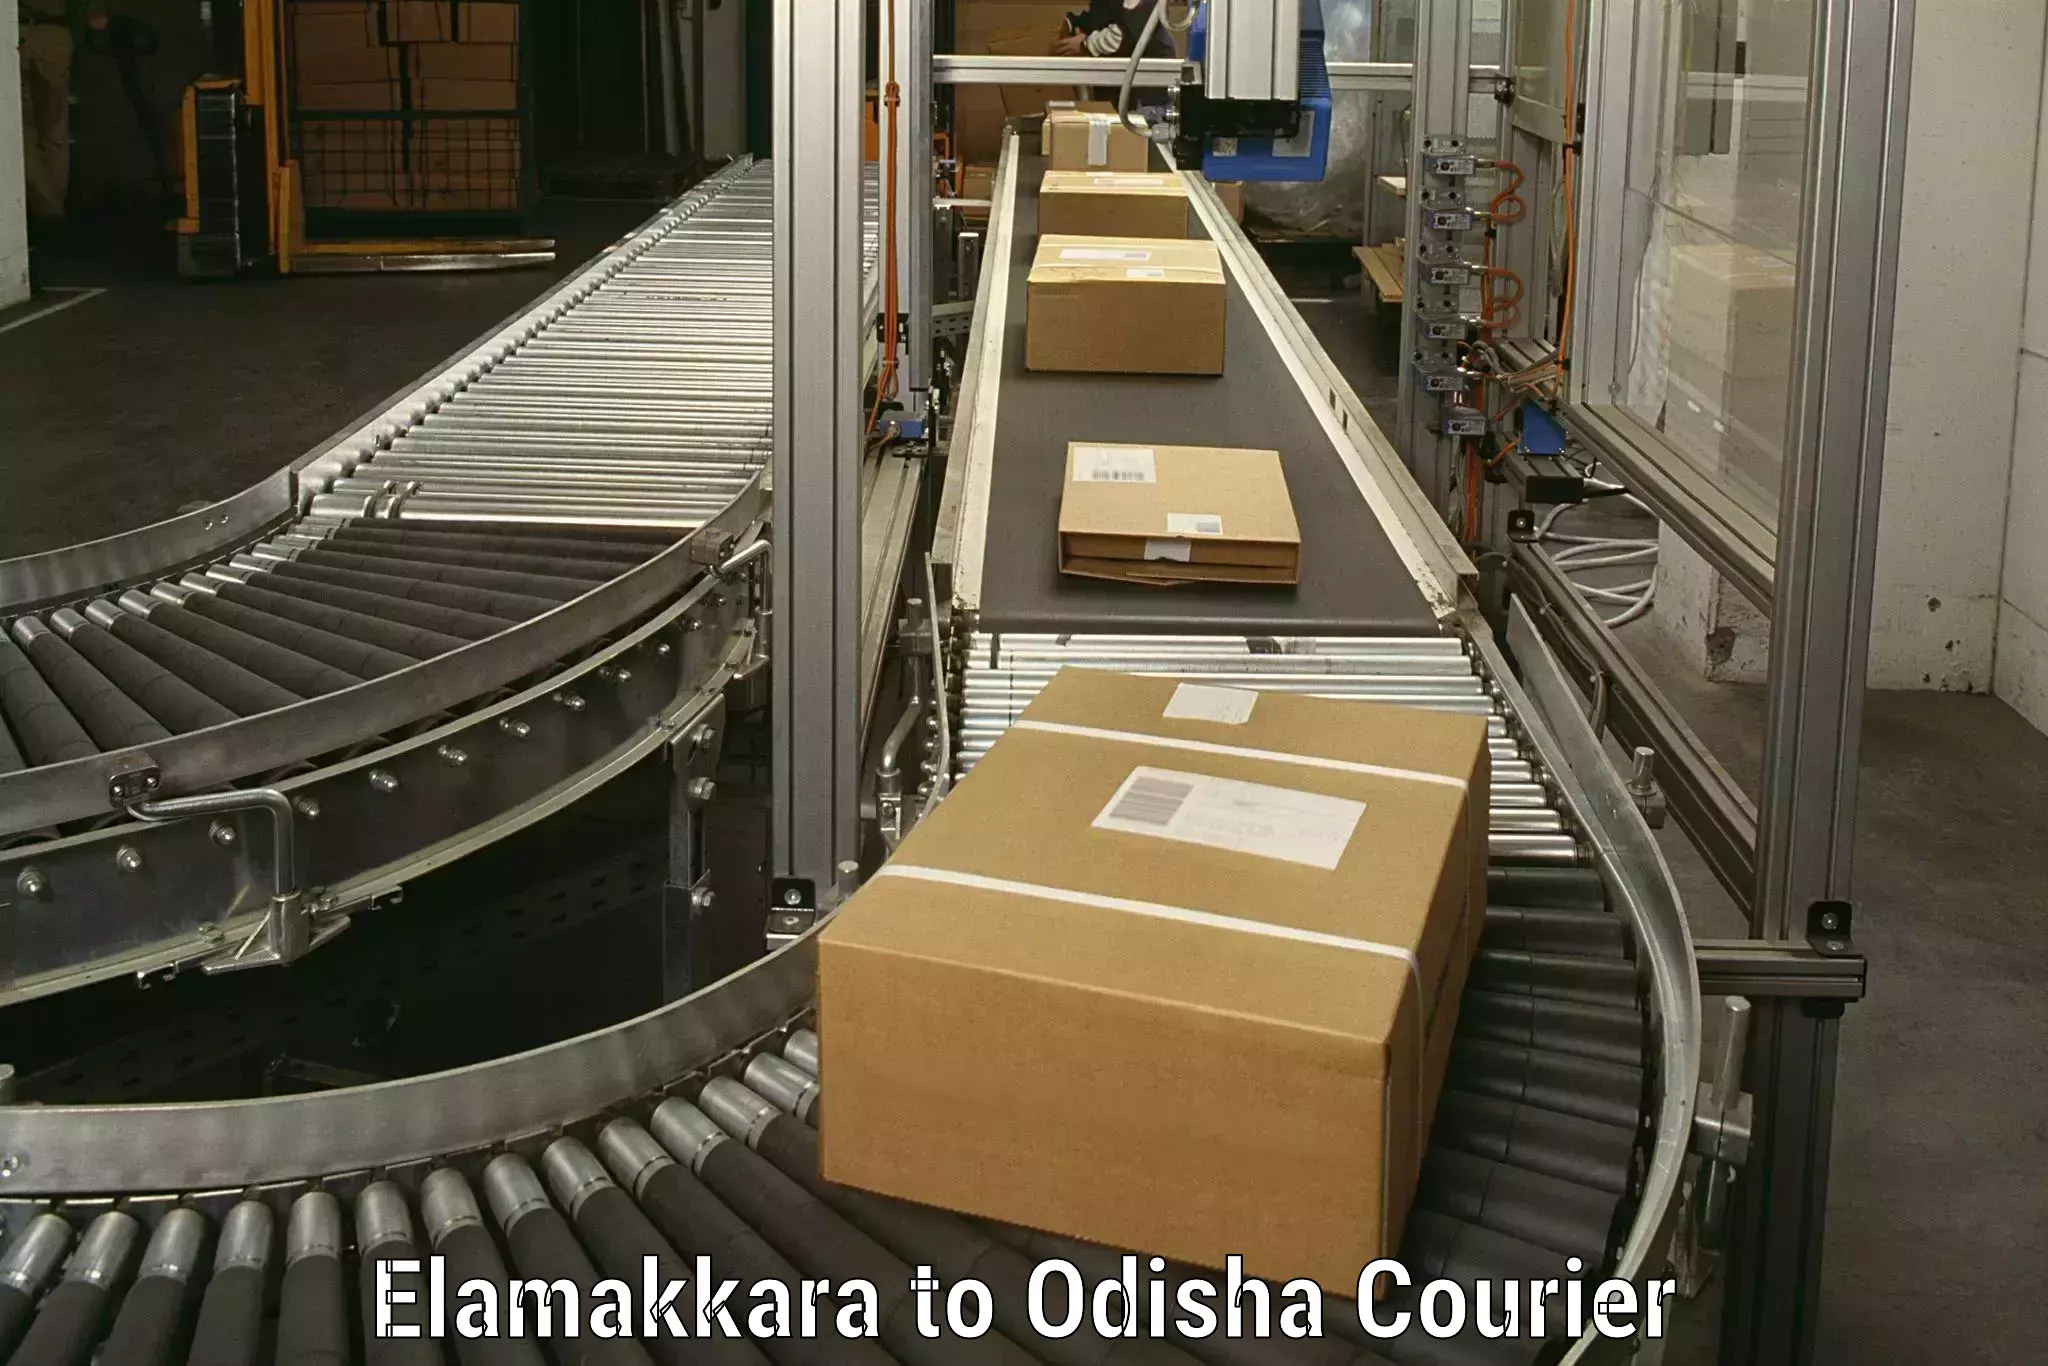 Efficient moving company Elamakkara to Odisha